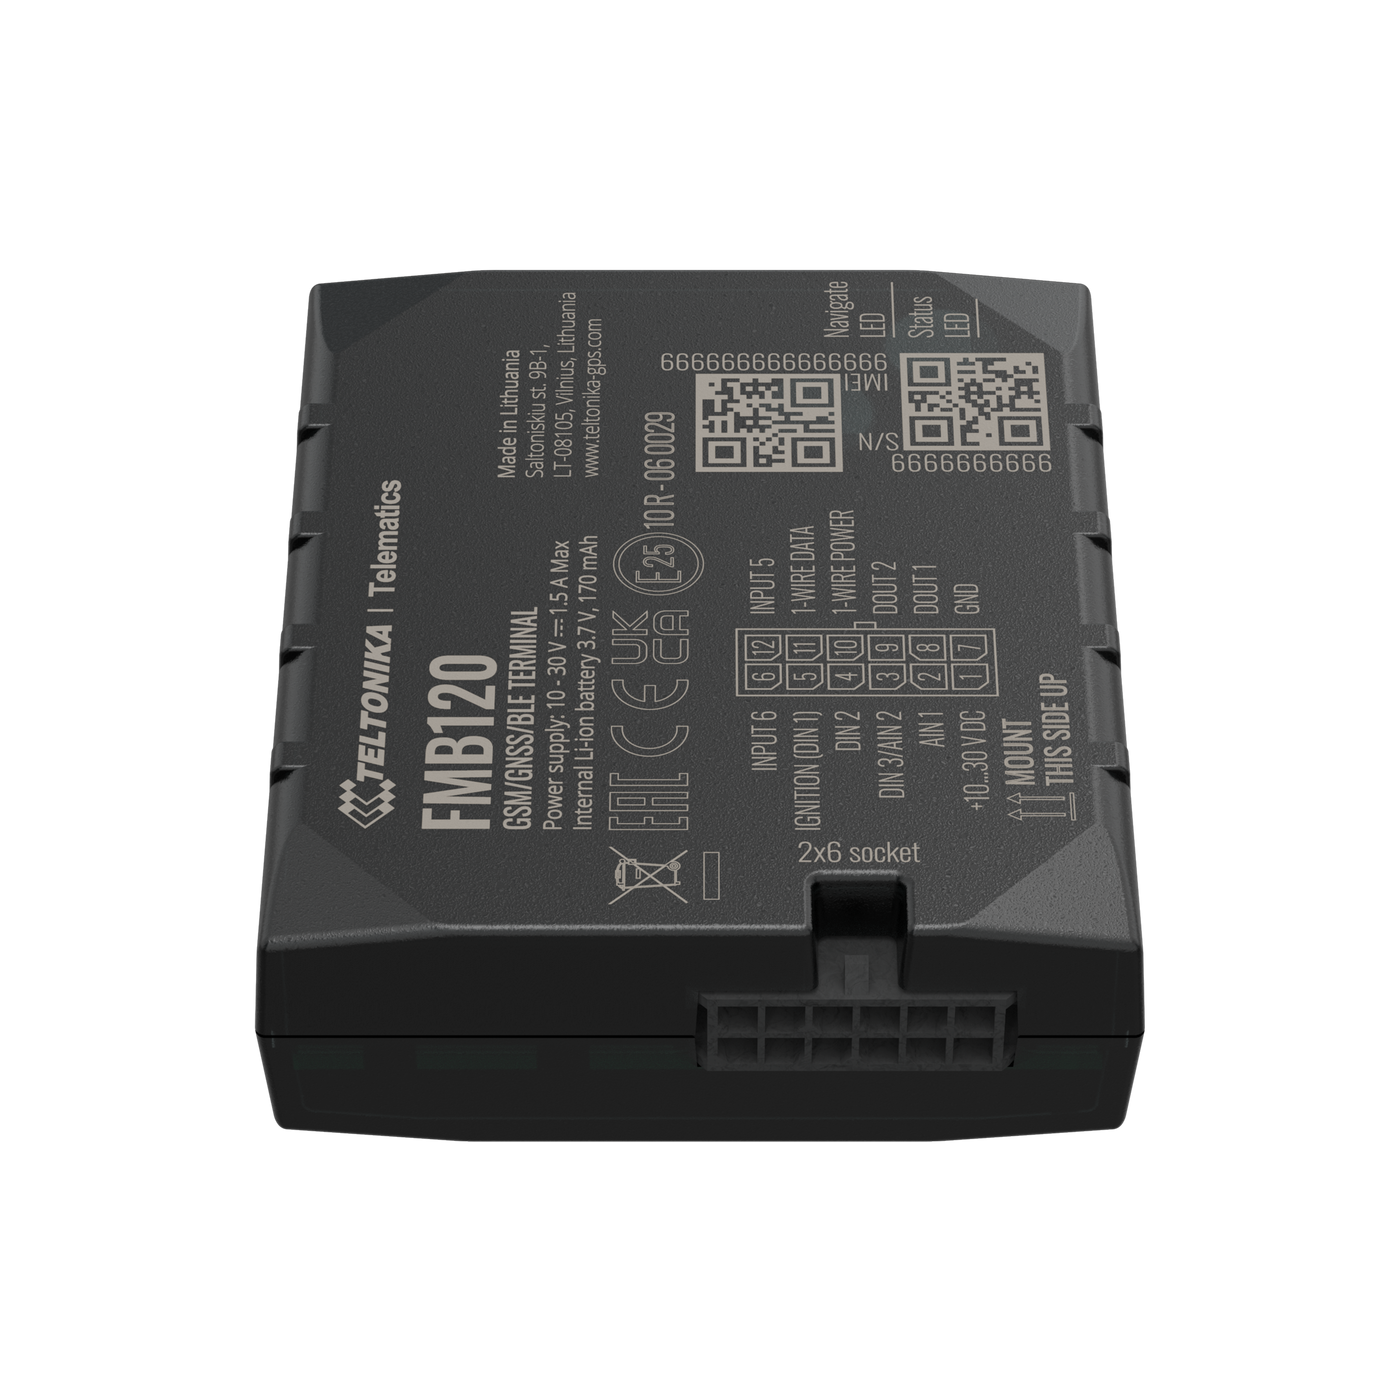 Teltonika FMB120 - GPS with Accelerometer